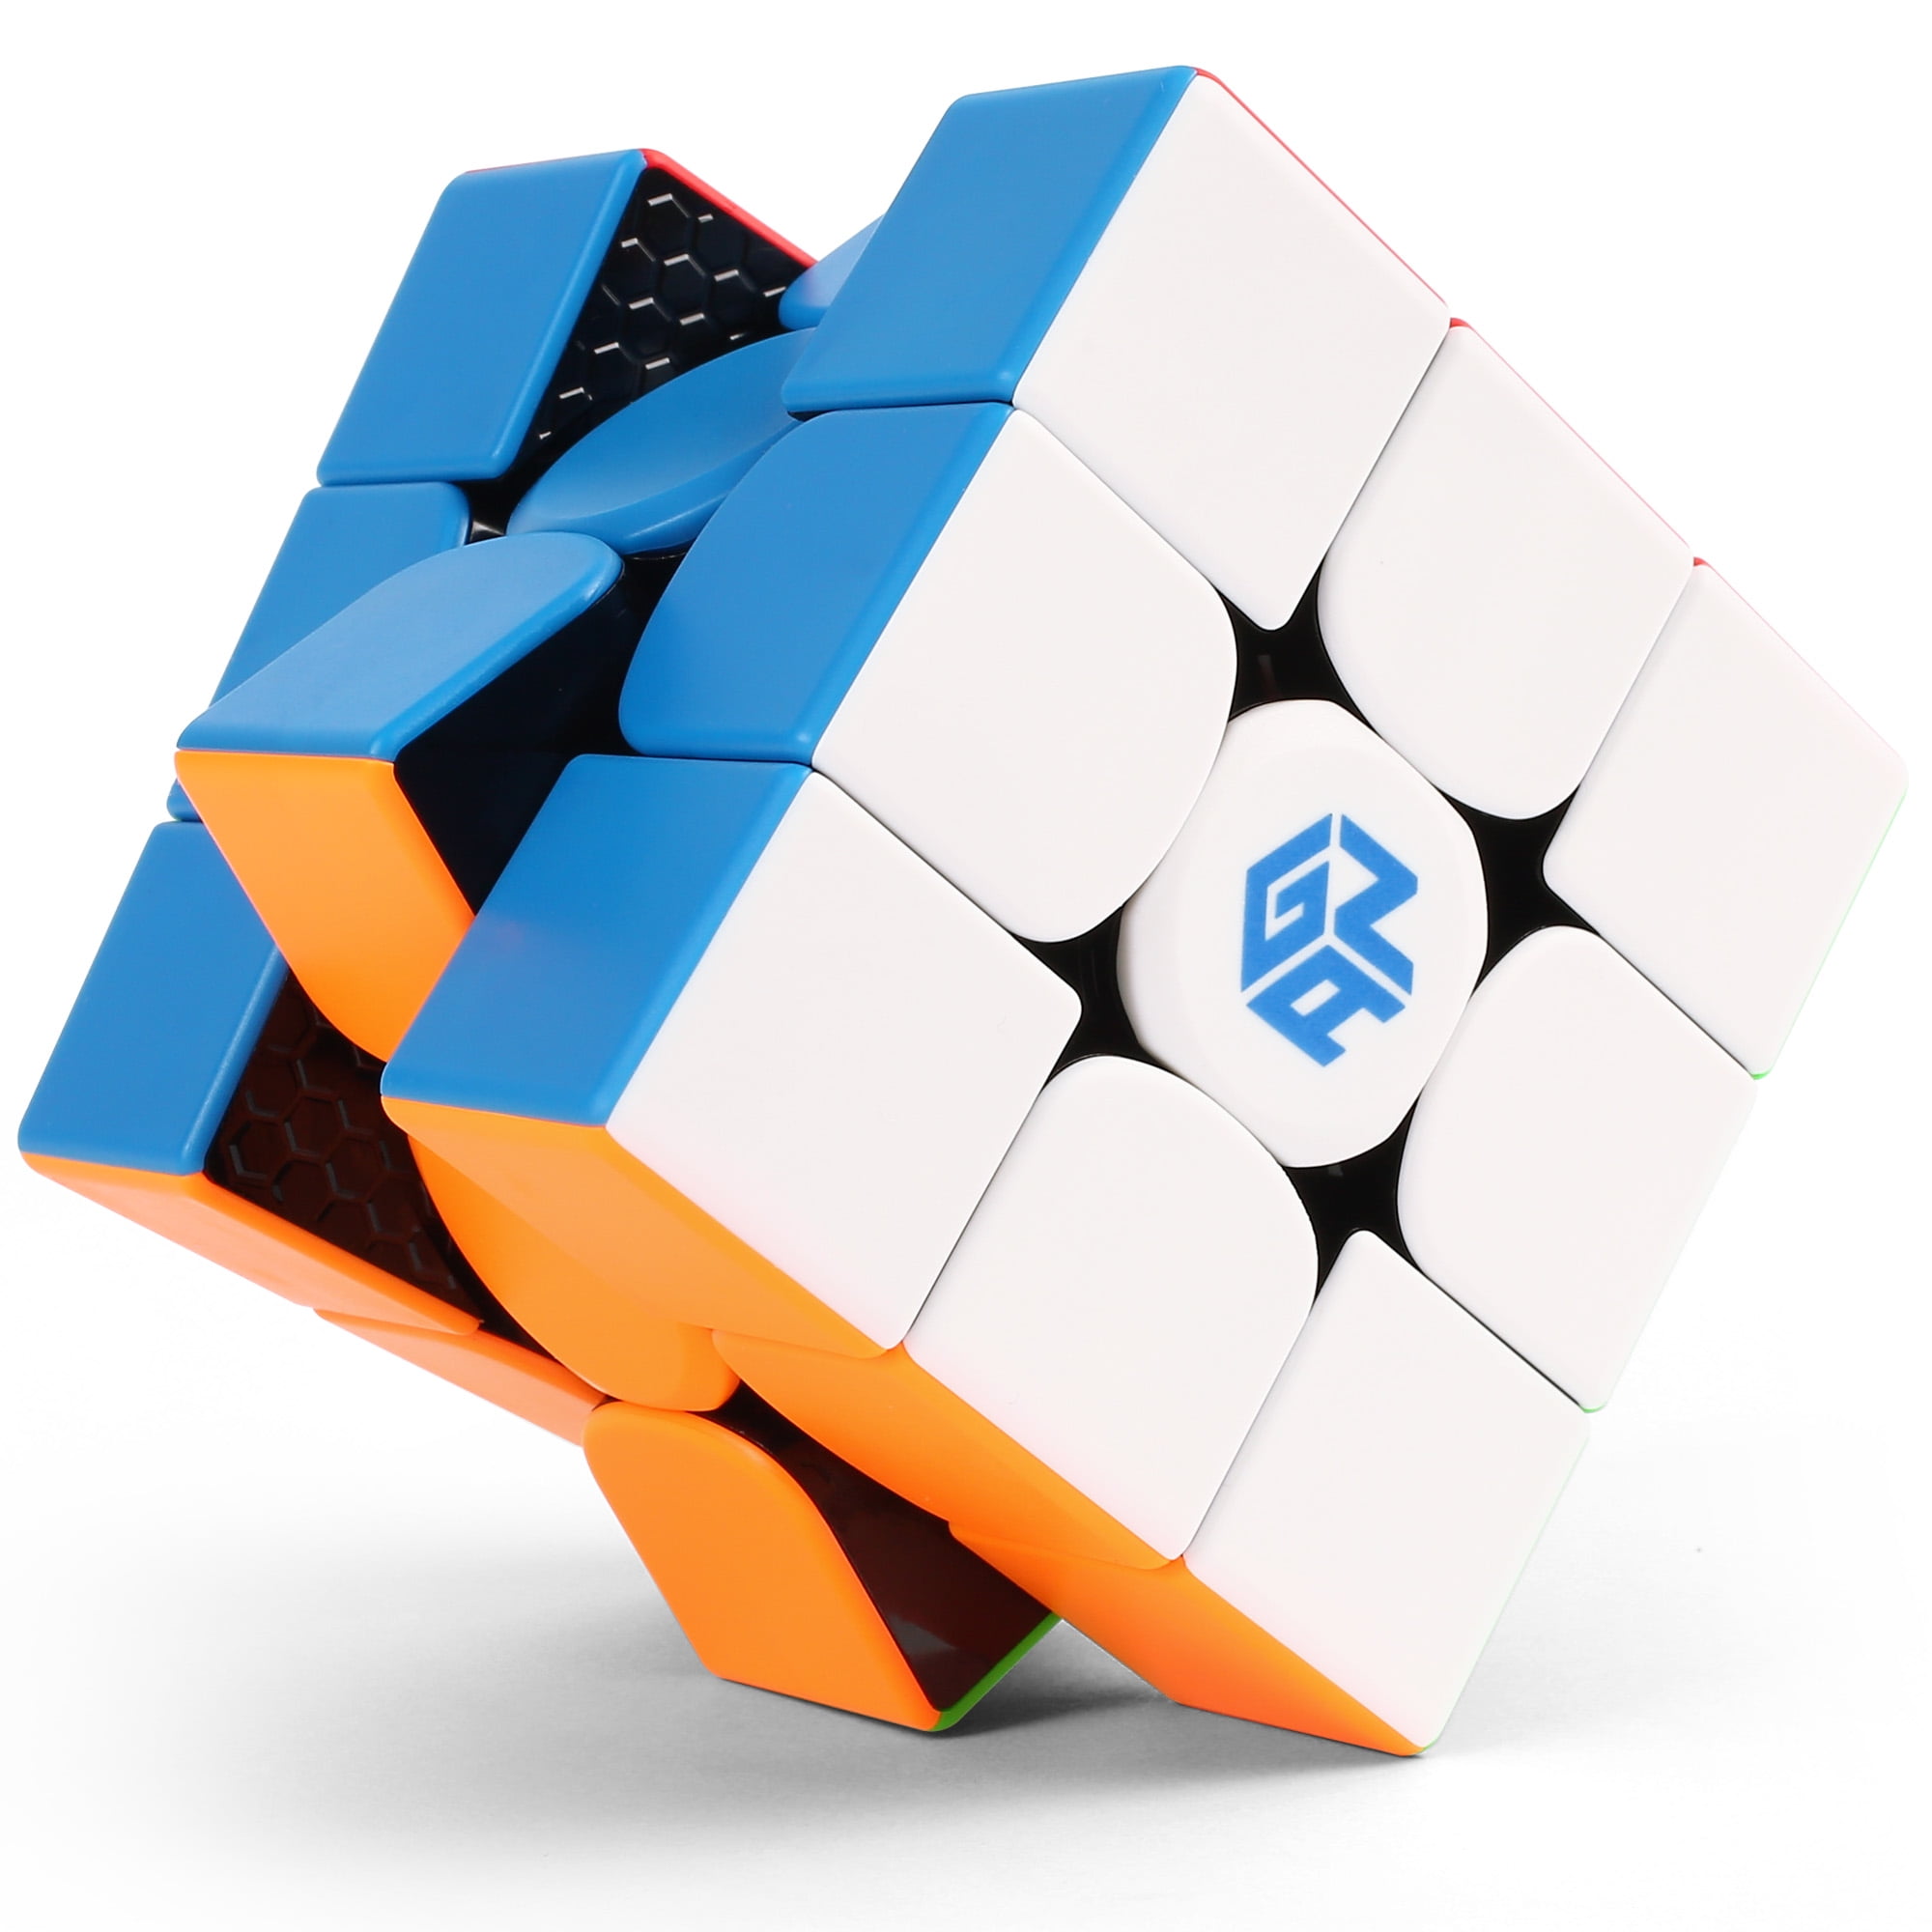 2020 GAN Skewb Standard M Magnetic Speed Magic Cube Stickerless Twist Puzzle Toy 